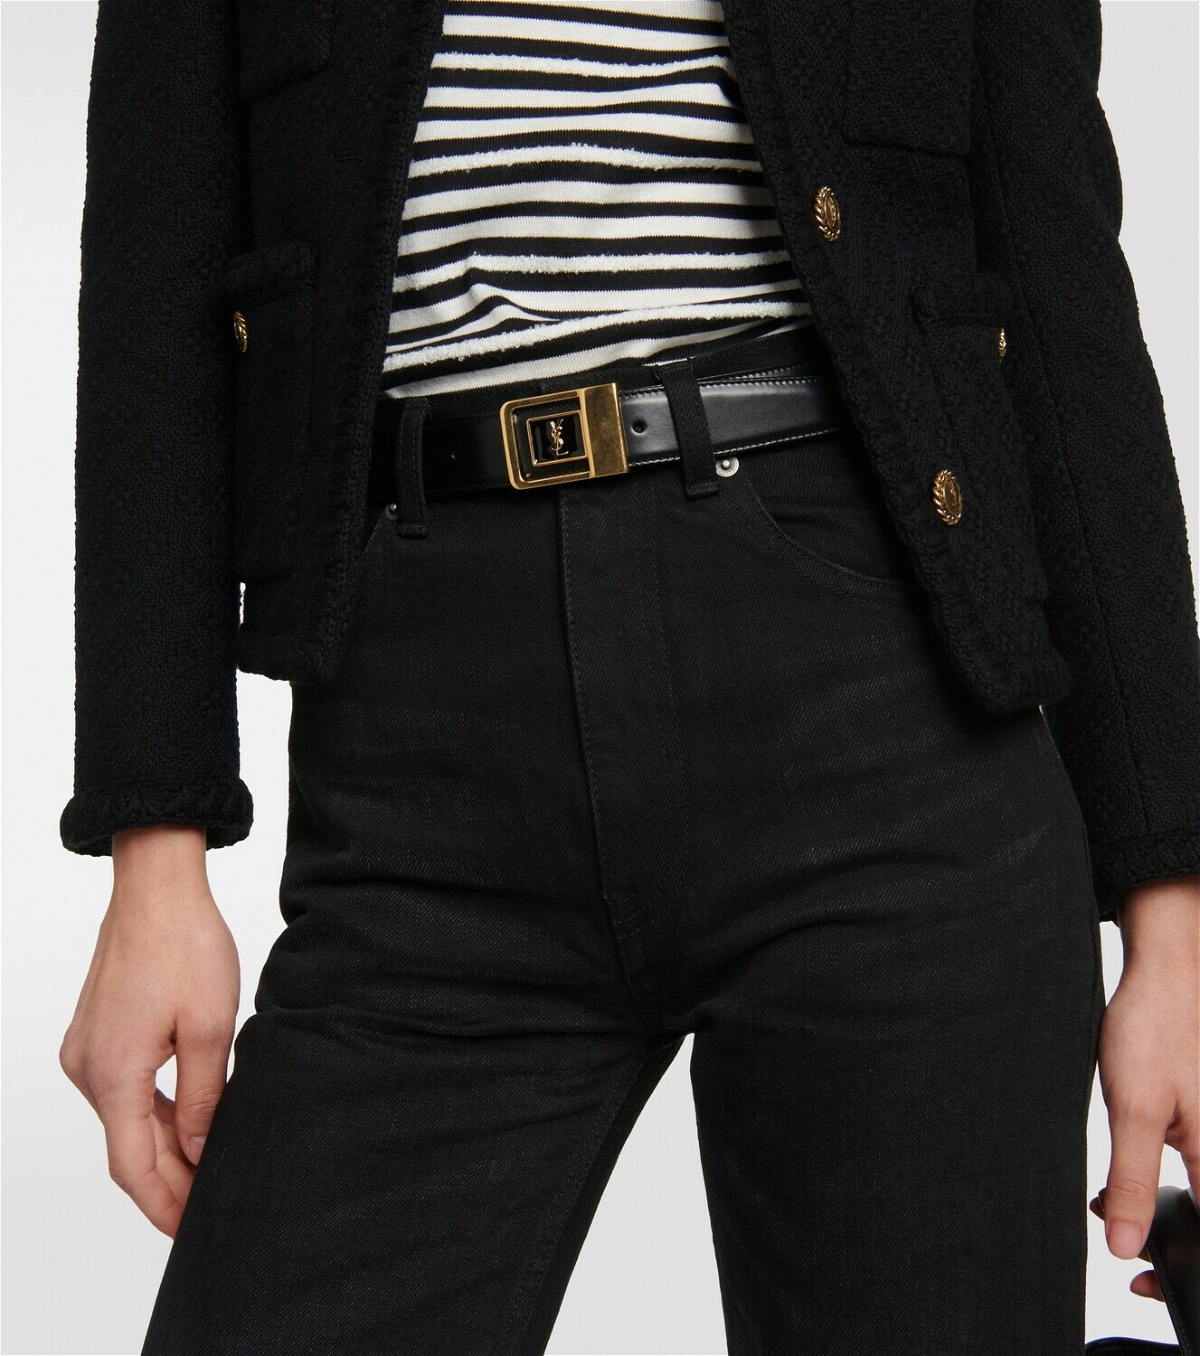 Cassandre Leather Belt in Black - Saint Laurent